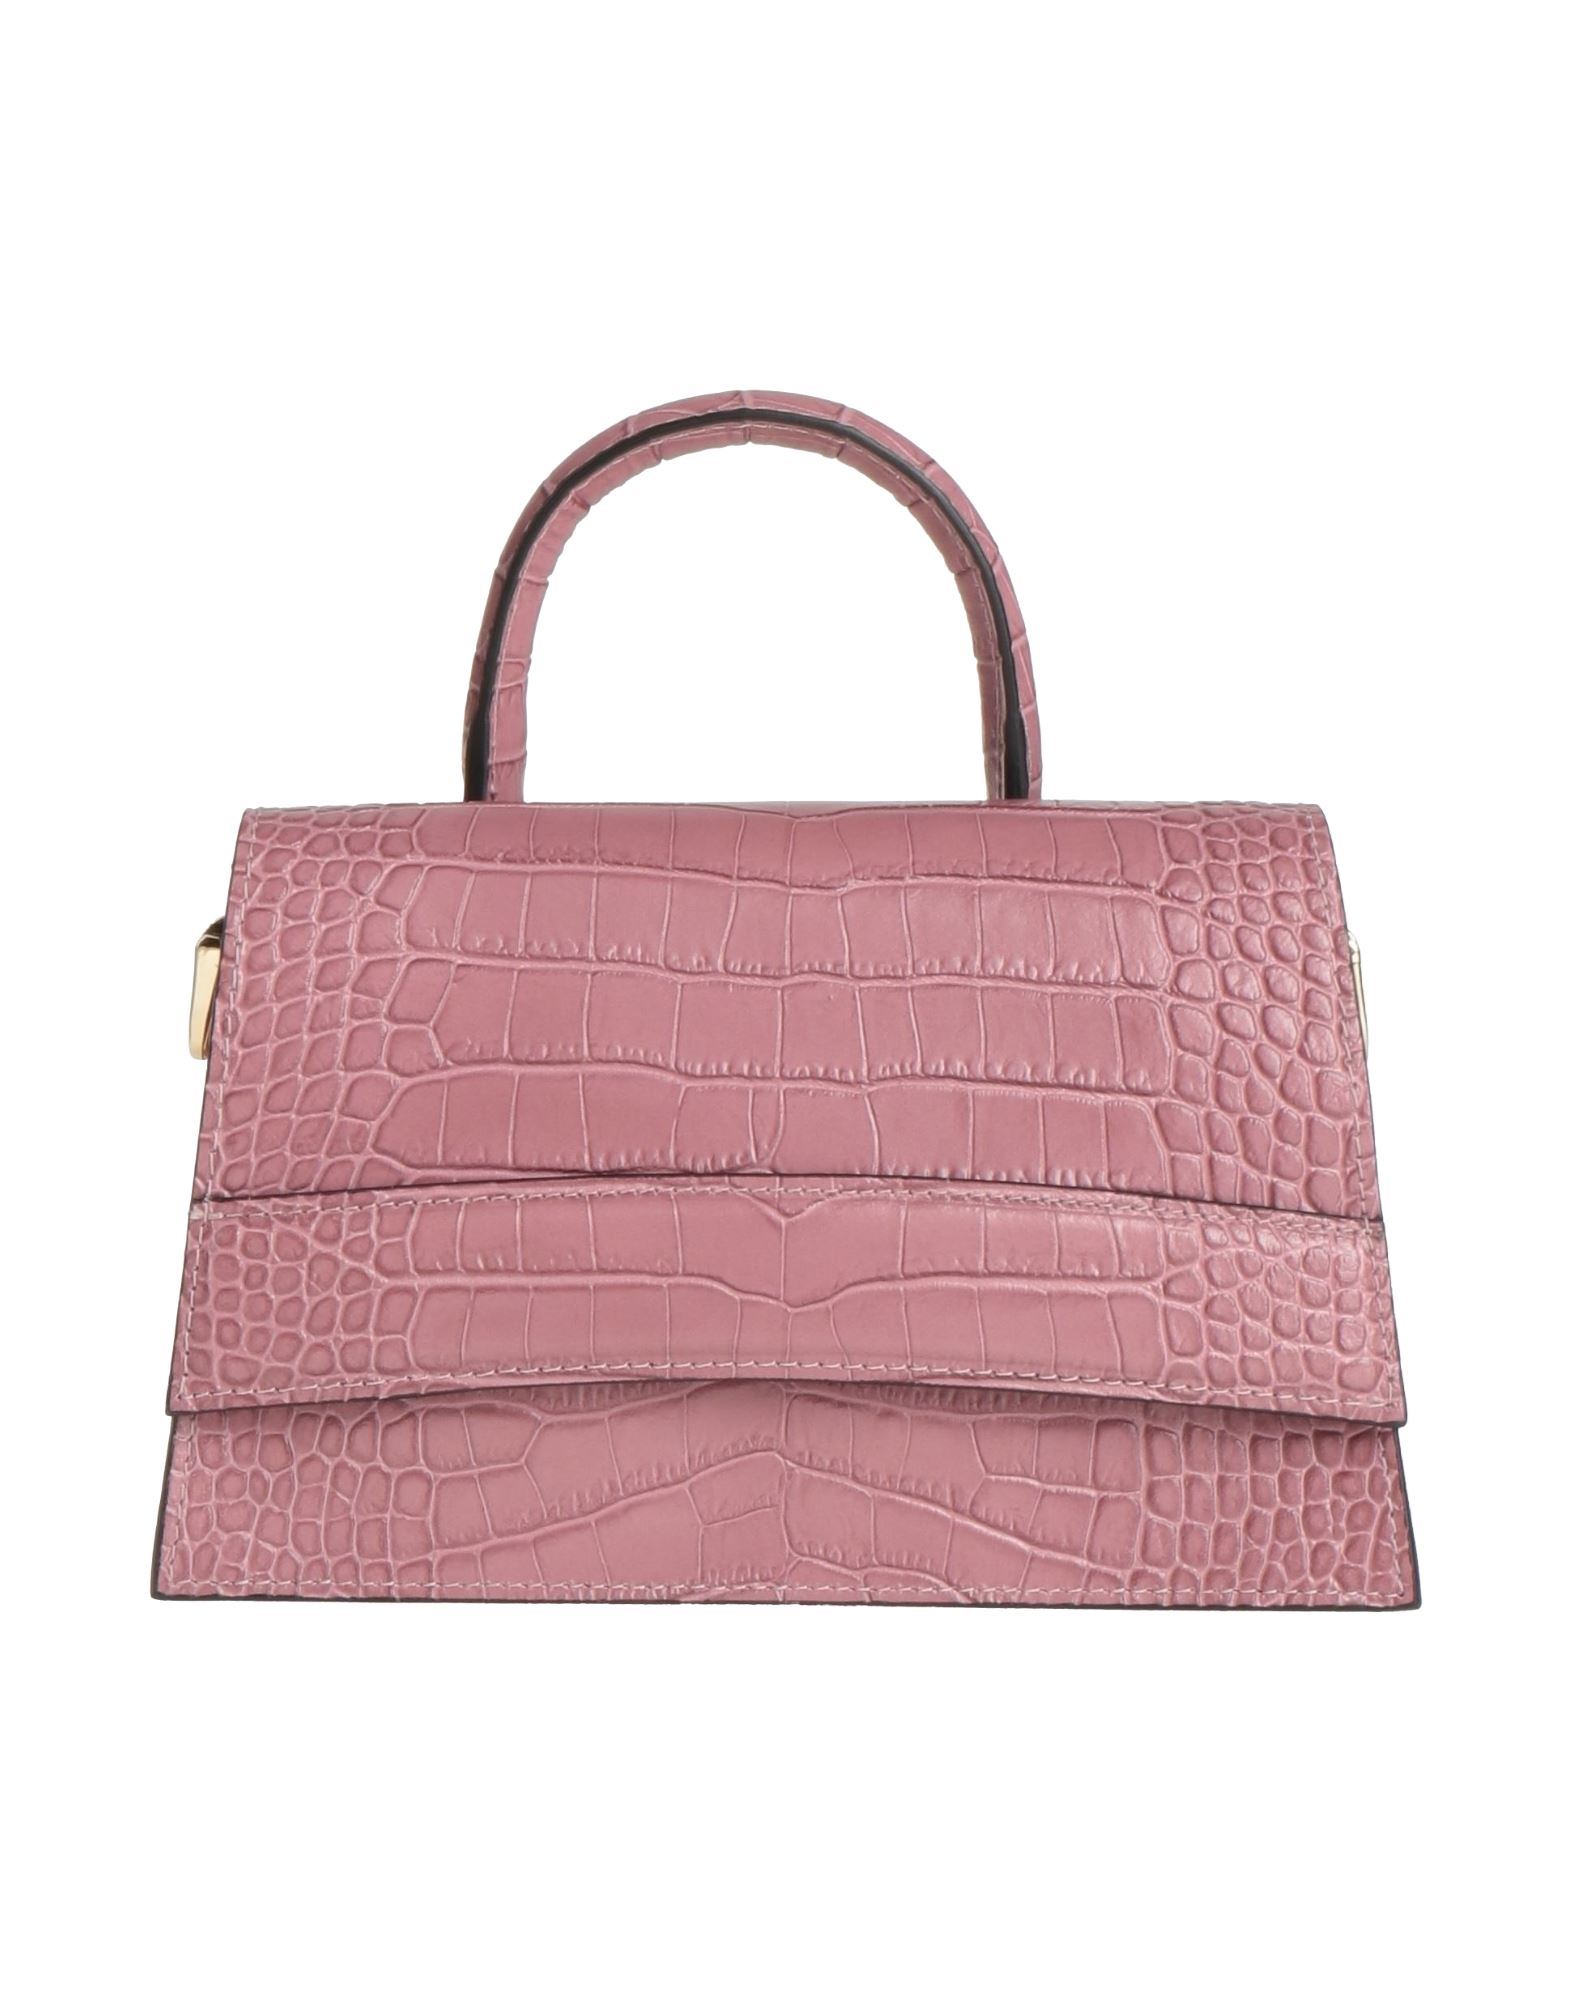 Ab Asia Bellucci Handbags In Purple